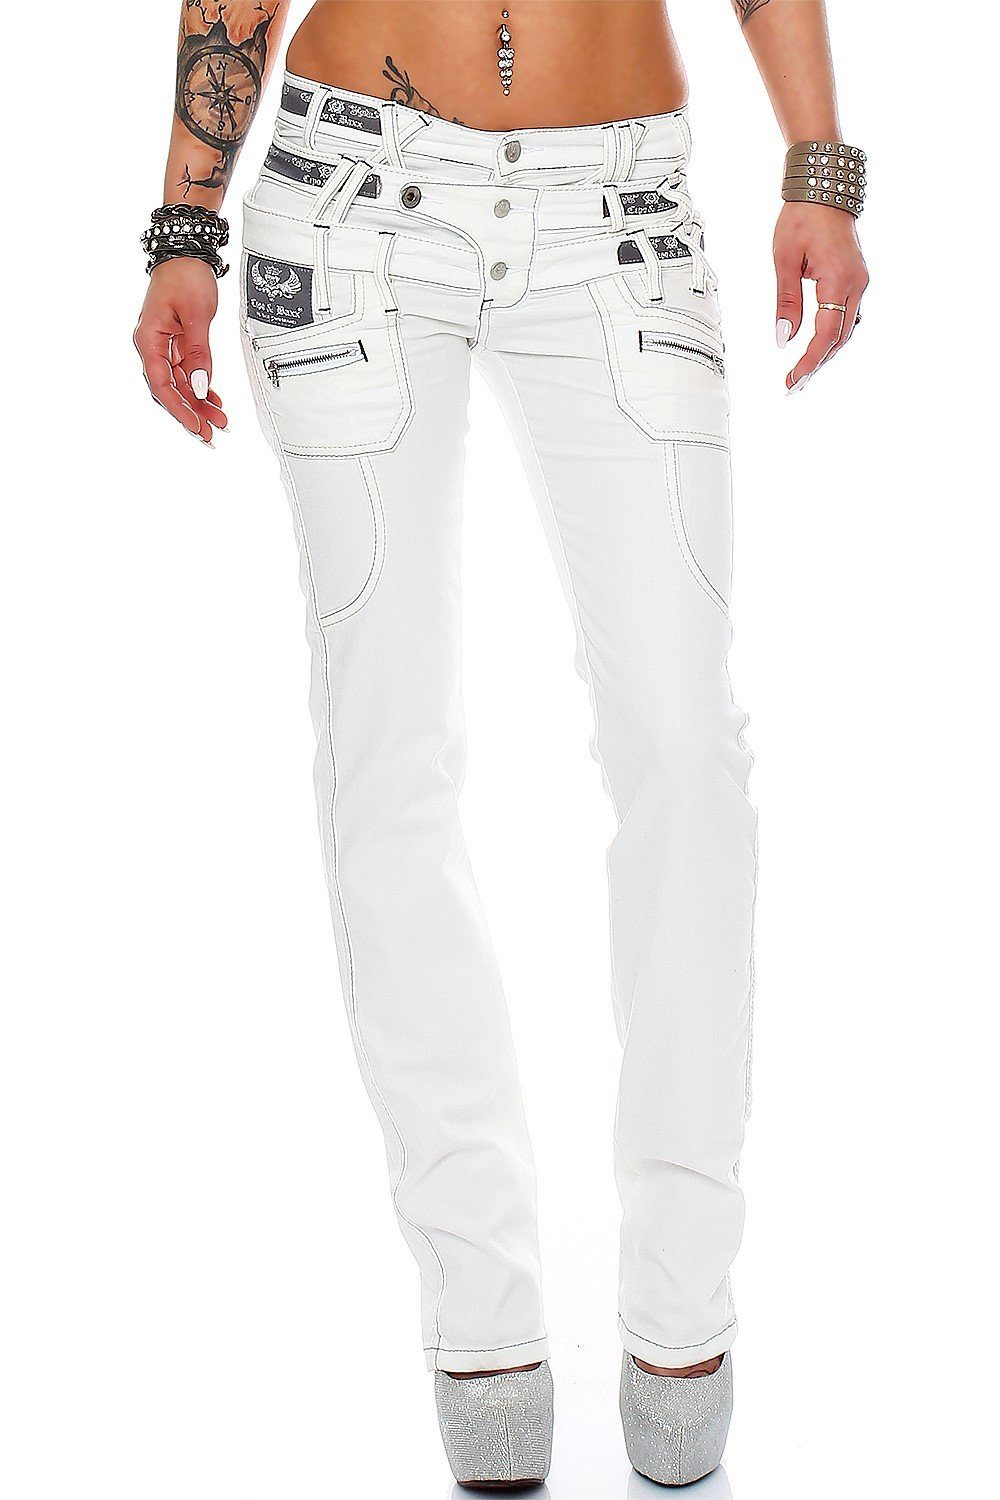 Cipo & Baxx 5-Pocket-Jeans Hose BA-CBW0245 Weiße Biker